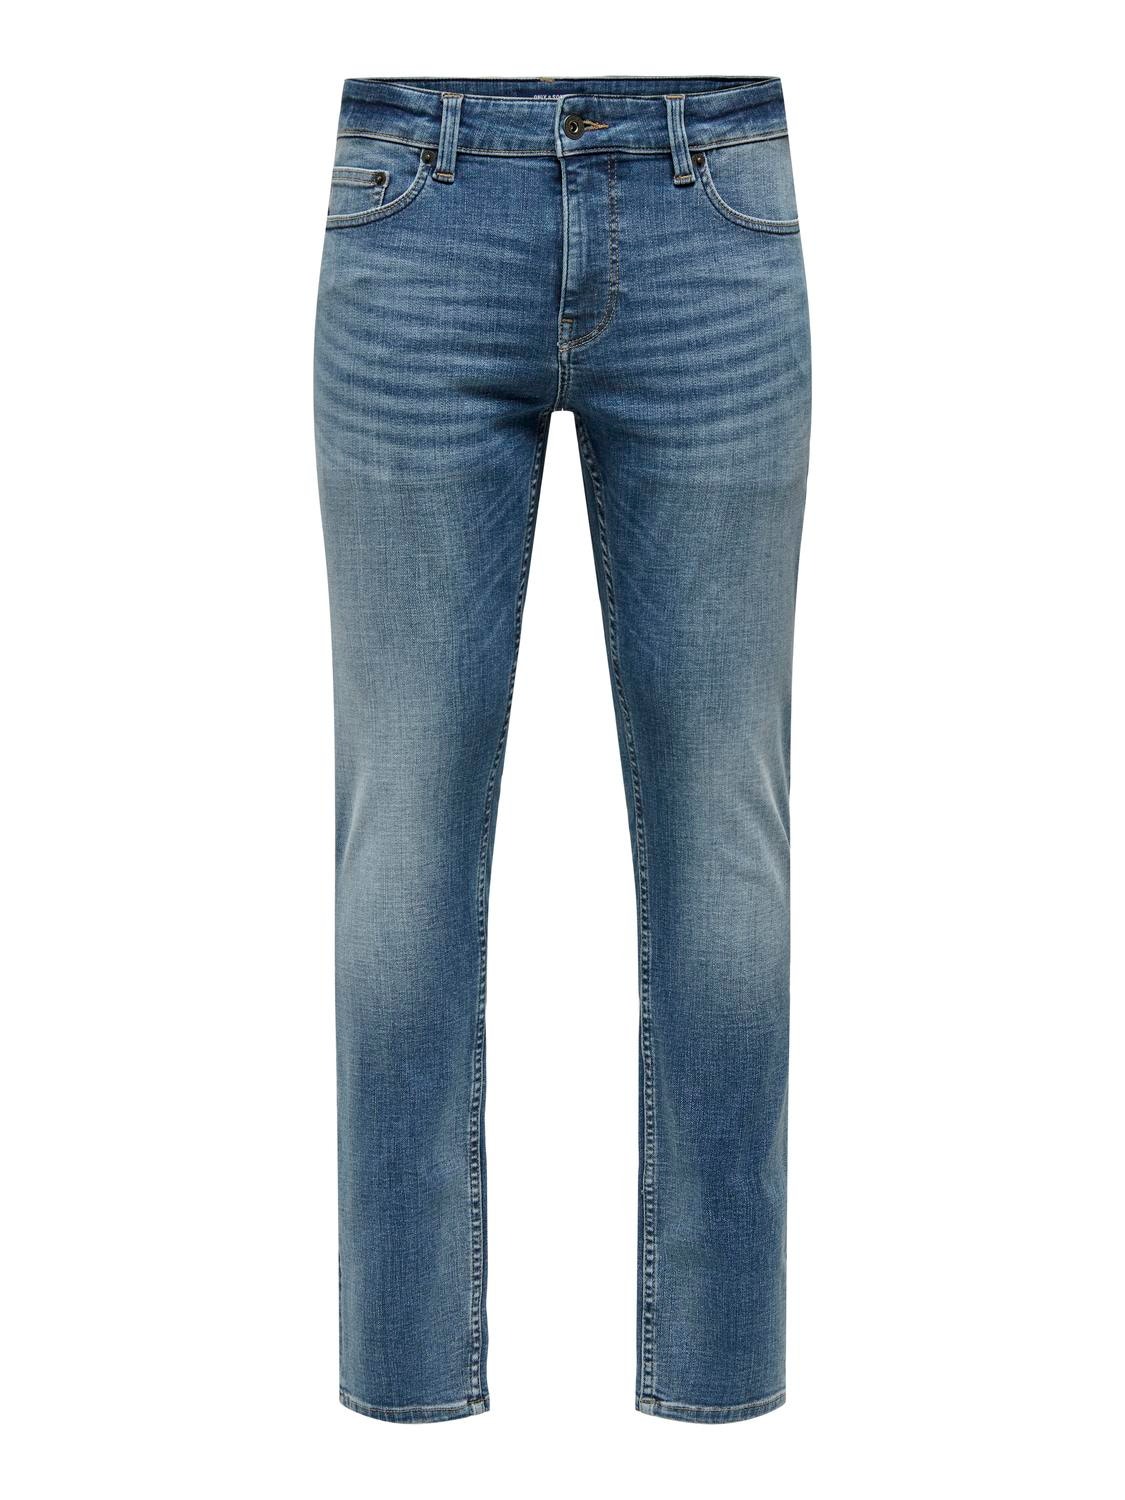 ONLY & SONS Slim Fit Low rise Jeans -Medium Blue Denim - 22029137